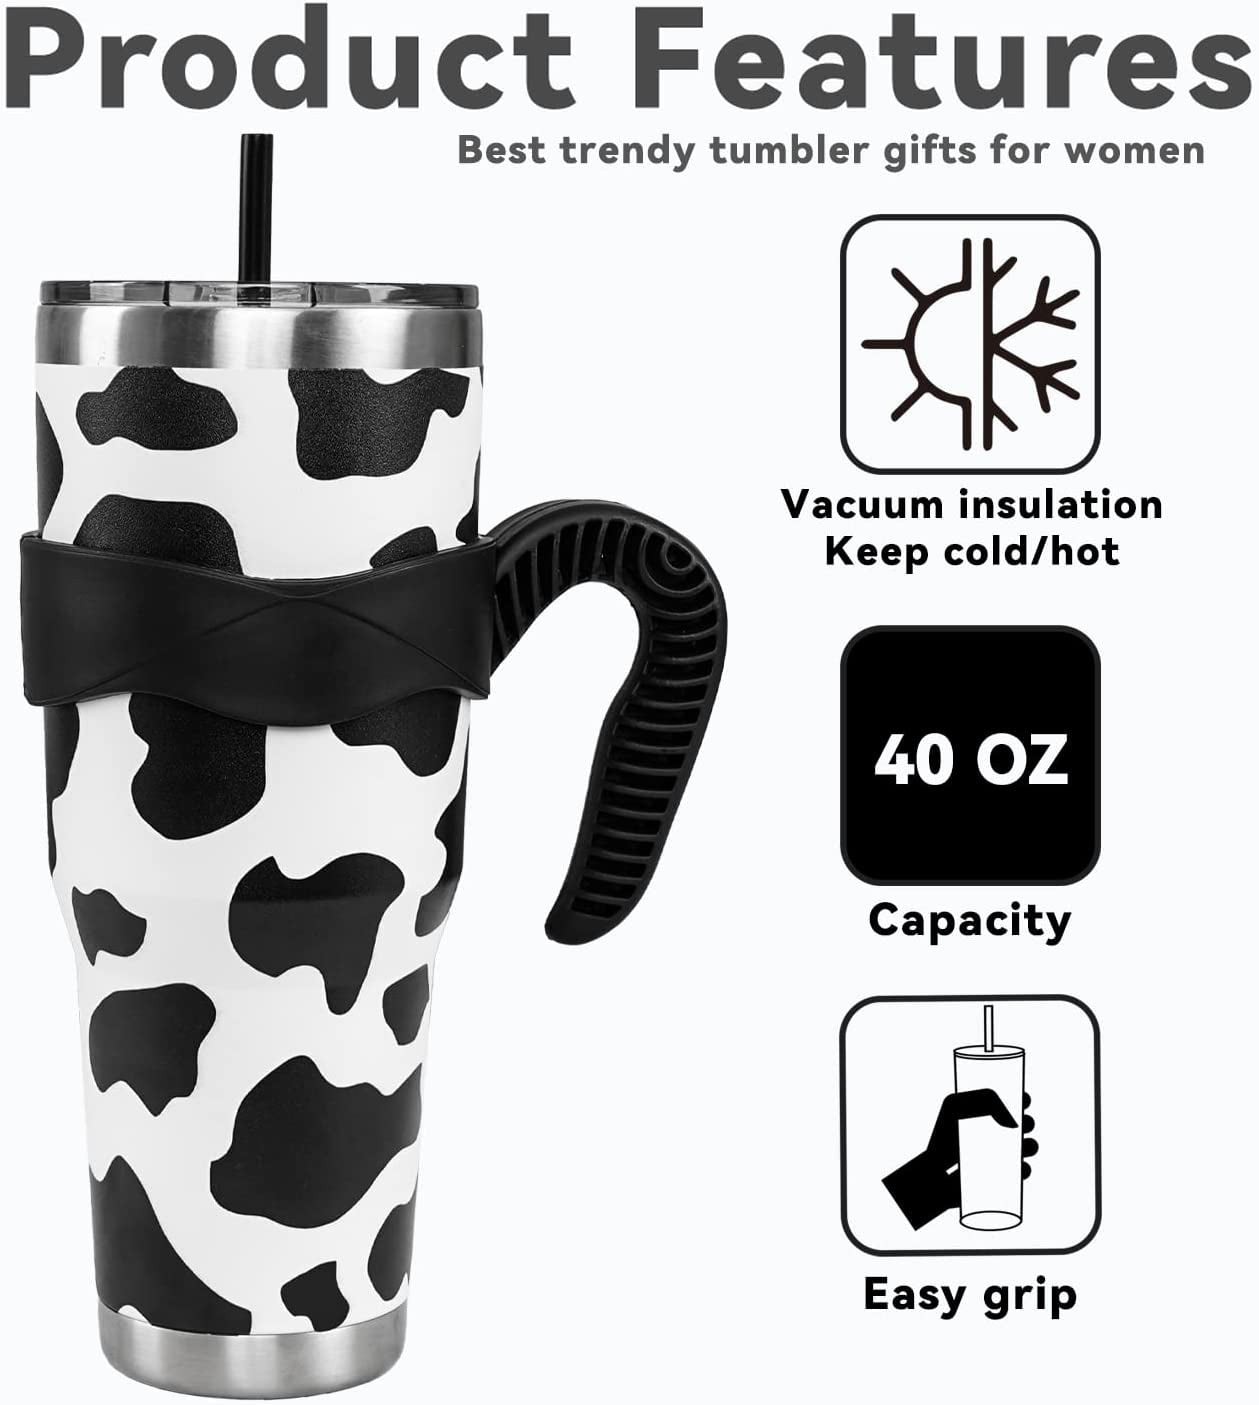 wonshia 40oz Cow print Tumbler With handle, Stainless